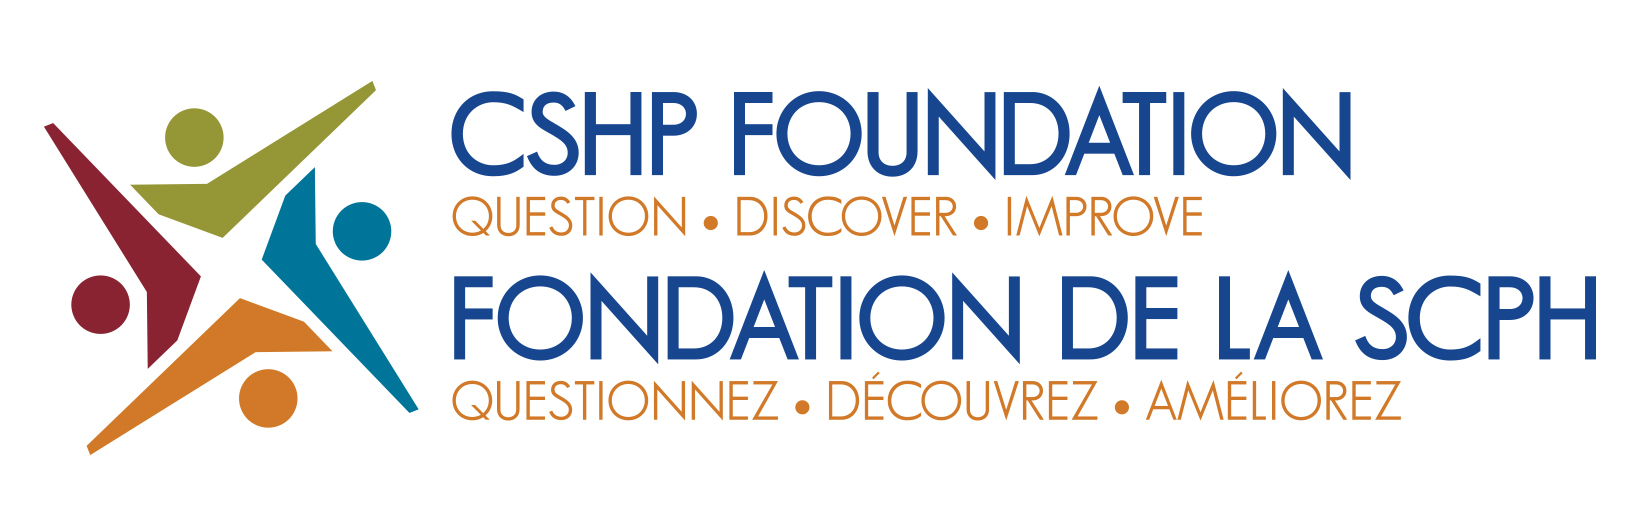 CSHP Foundation logo